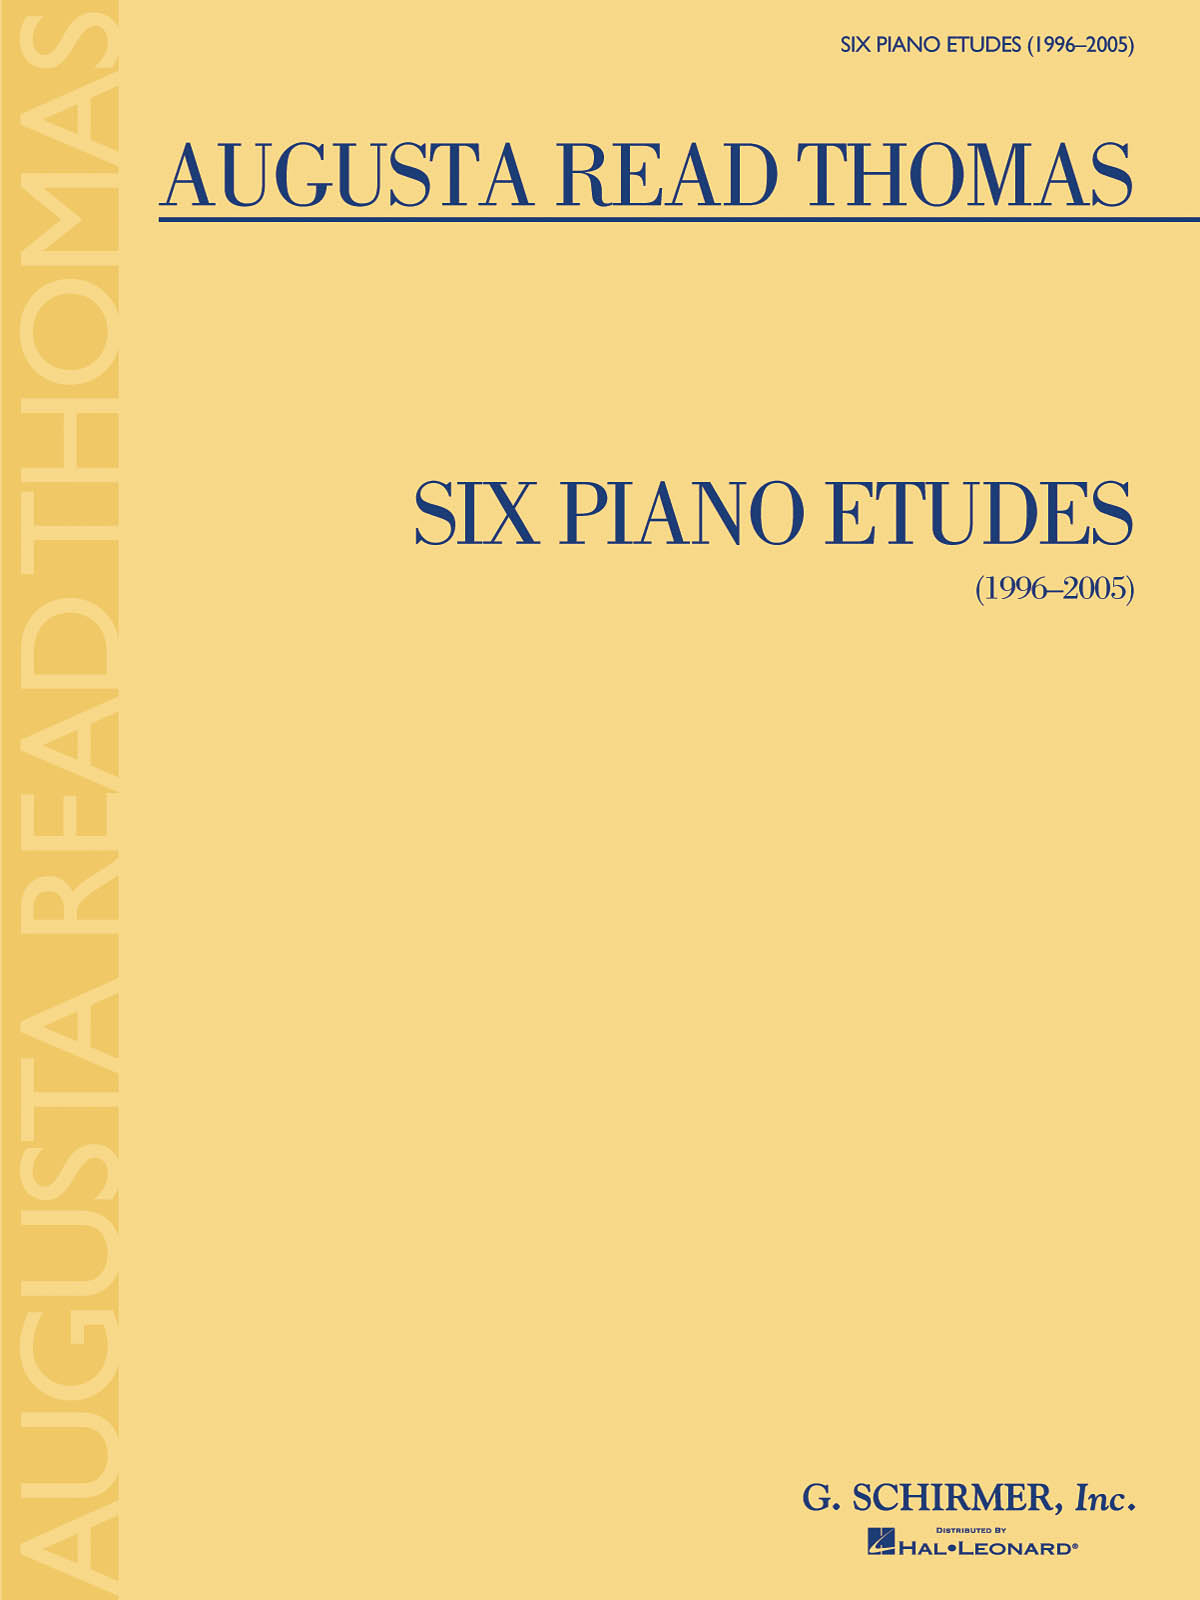 Augusta Read Thomas: Six Piano Etudes (1996-2005)